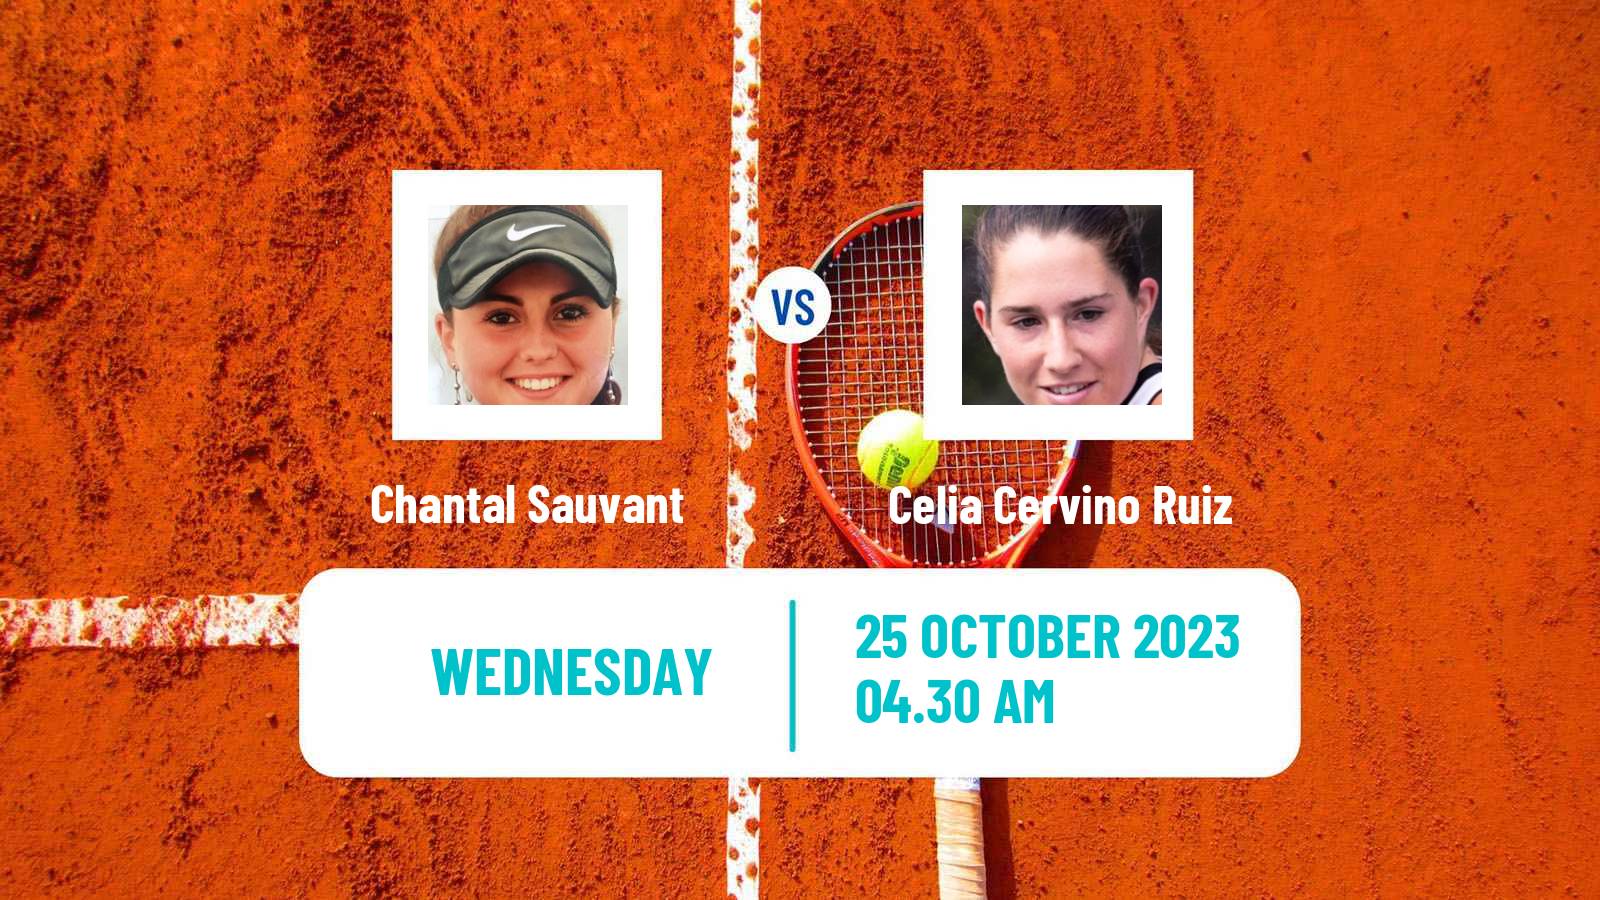 Tennis ITF W15 Villena Women Chantal Sauvant - Celia Cervino Ruiz